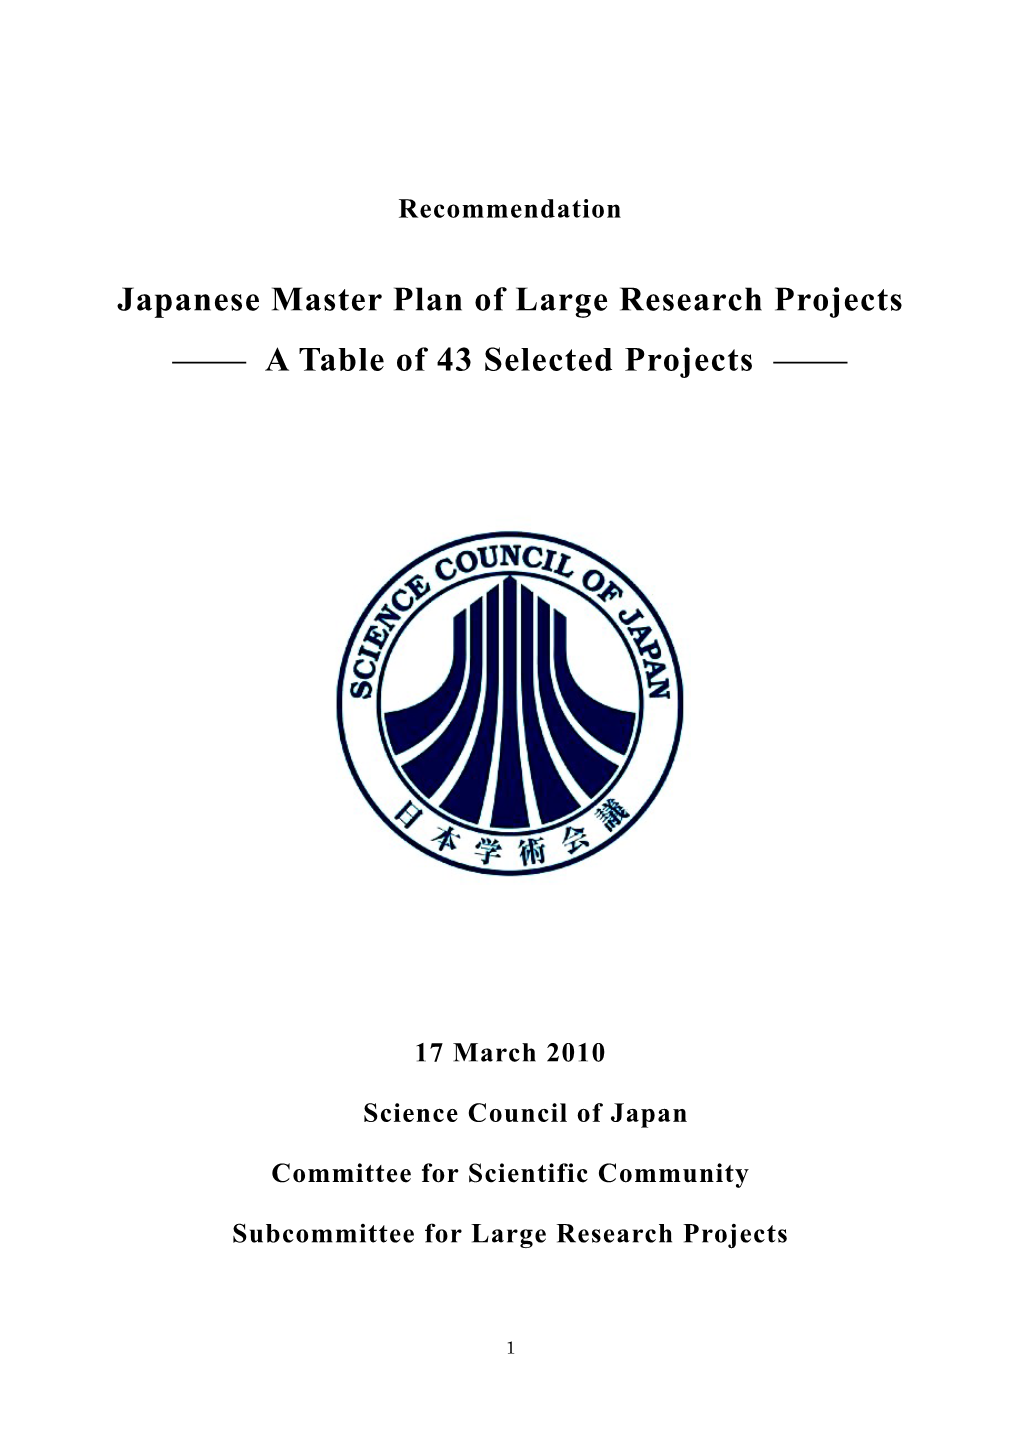 Recommendation Regarding Japanese Master Plan of Large